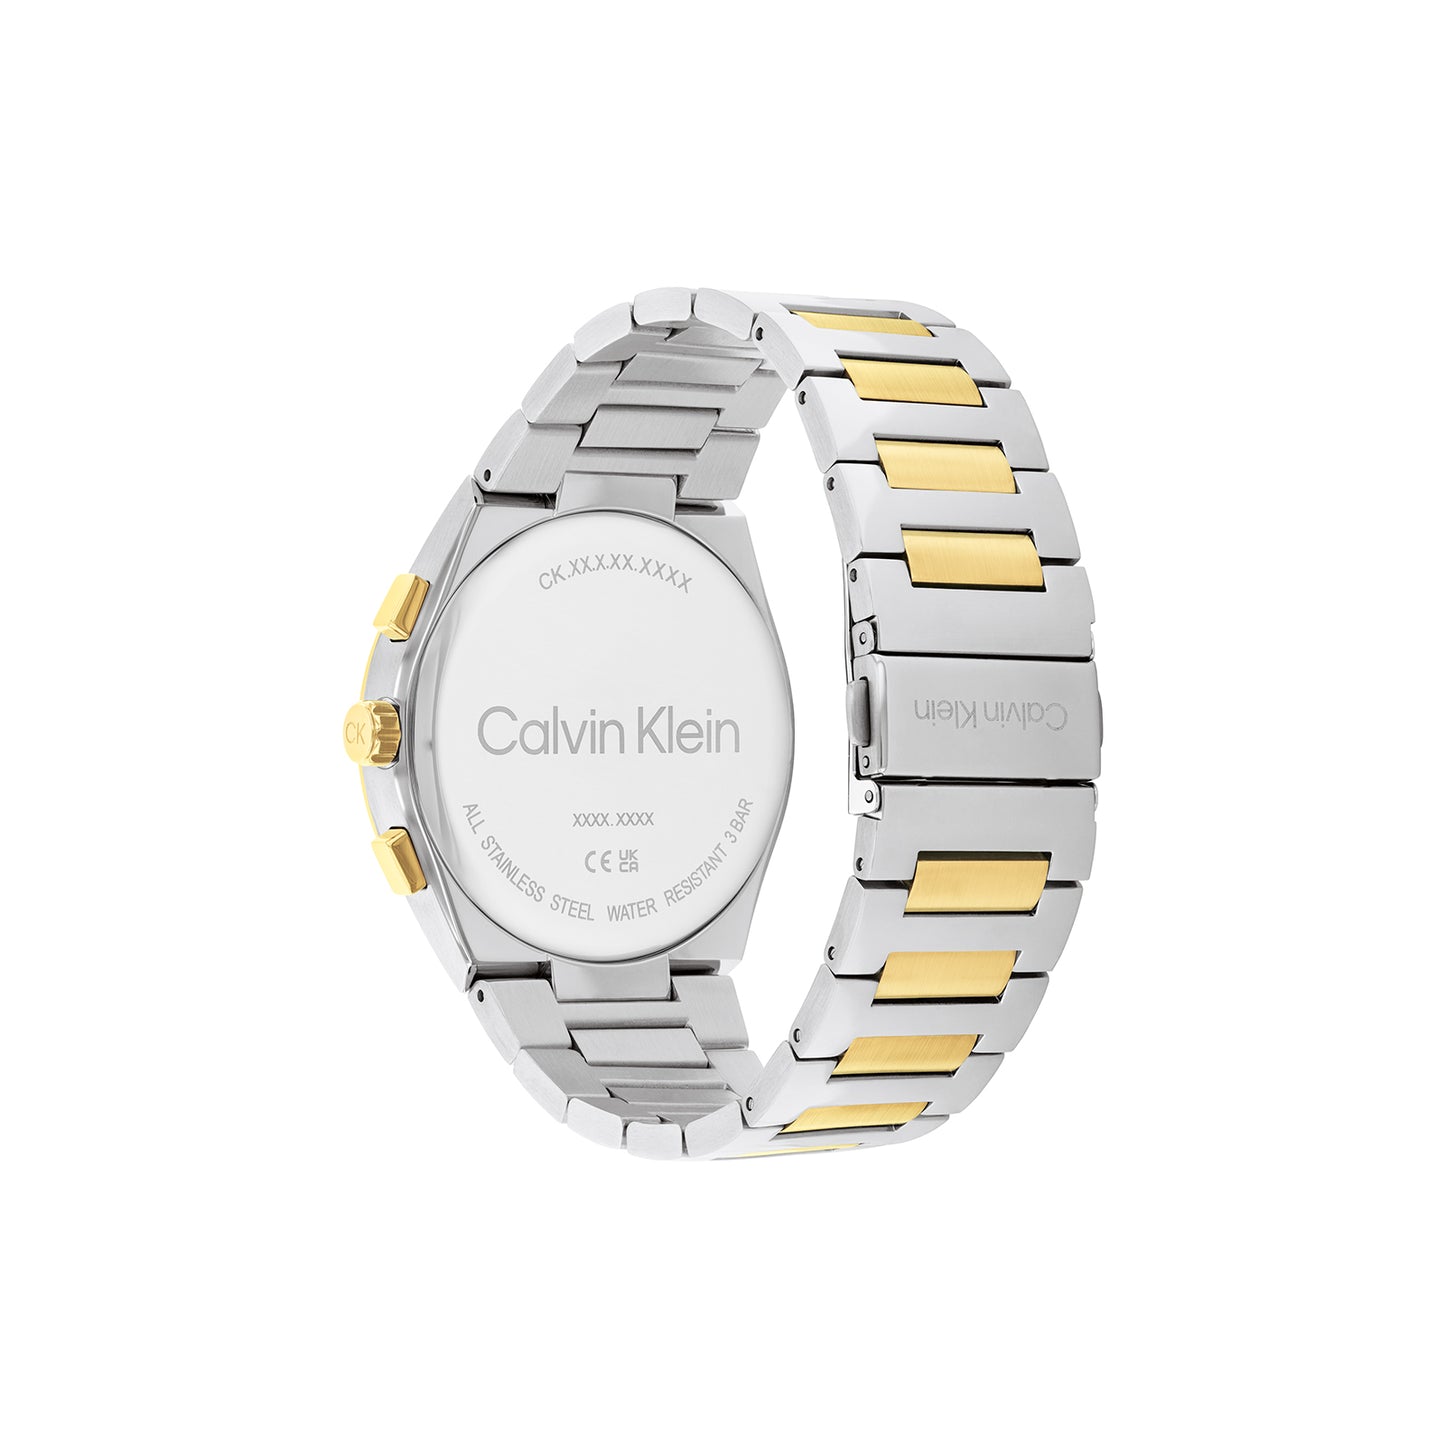 Calvin Klein 25200442 Men's Two-Tone Steel Watch